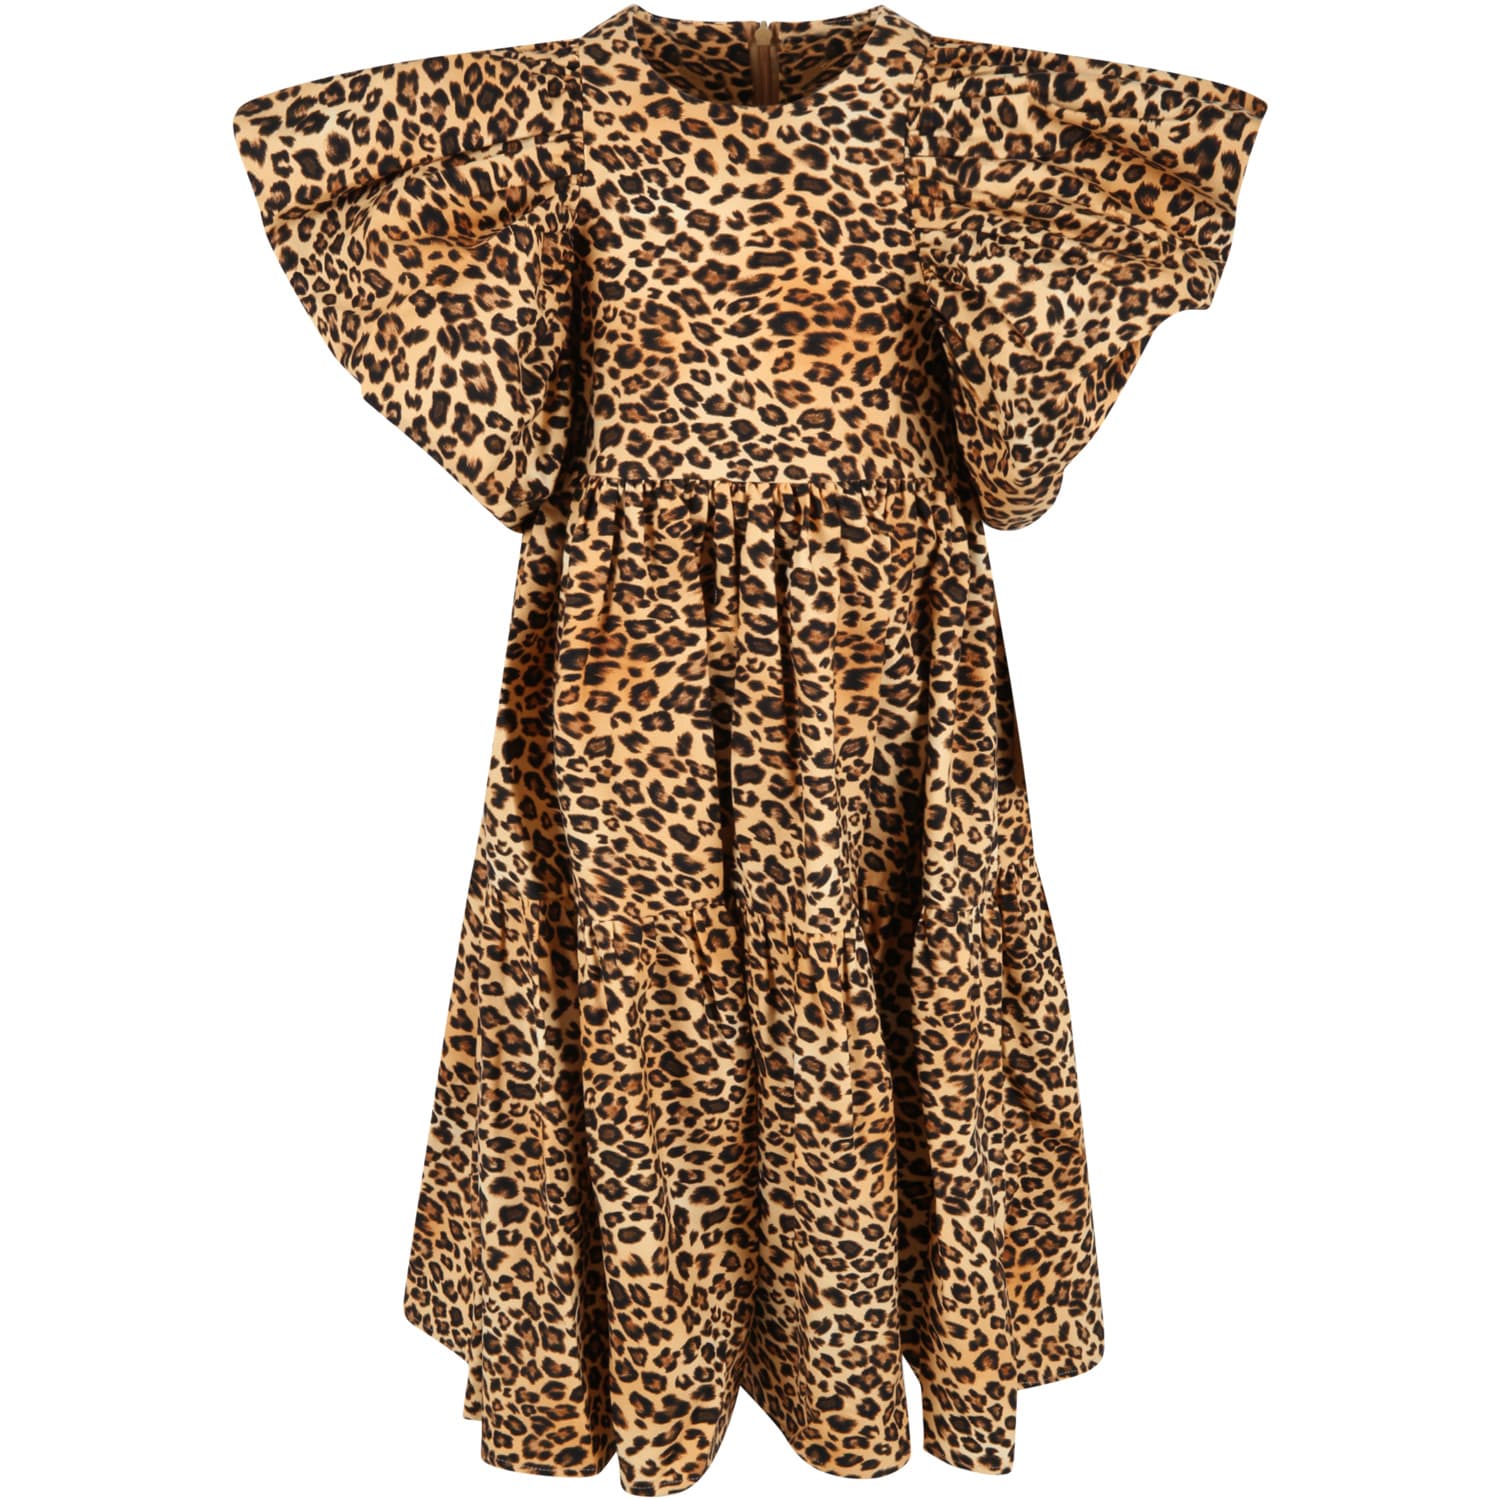 Caroline Bosmans Beige Dress For Girl With Animal Print